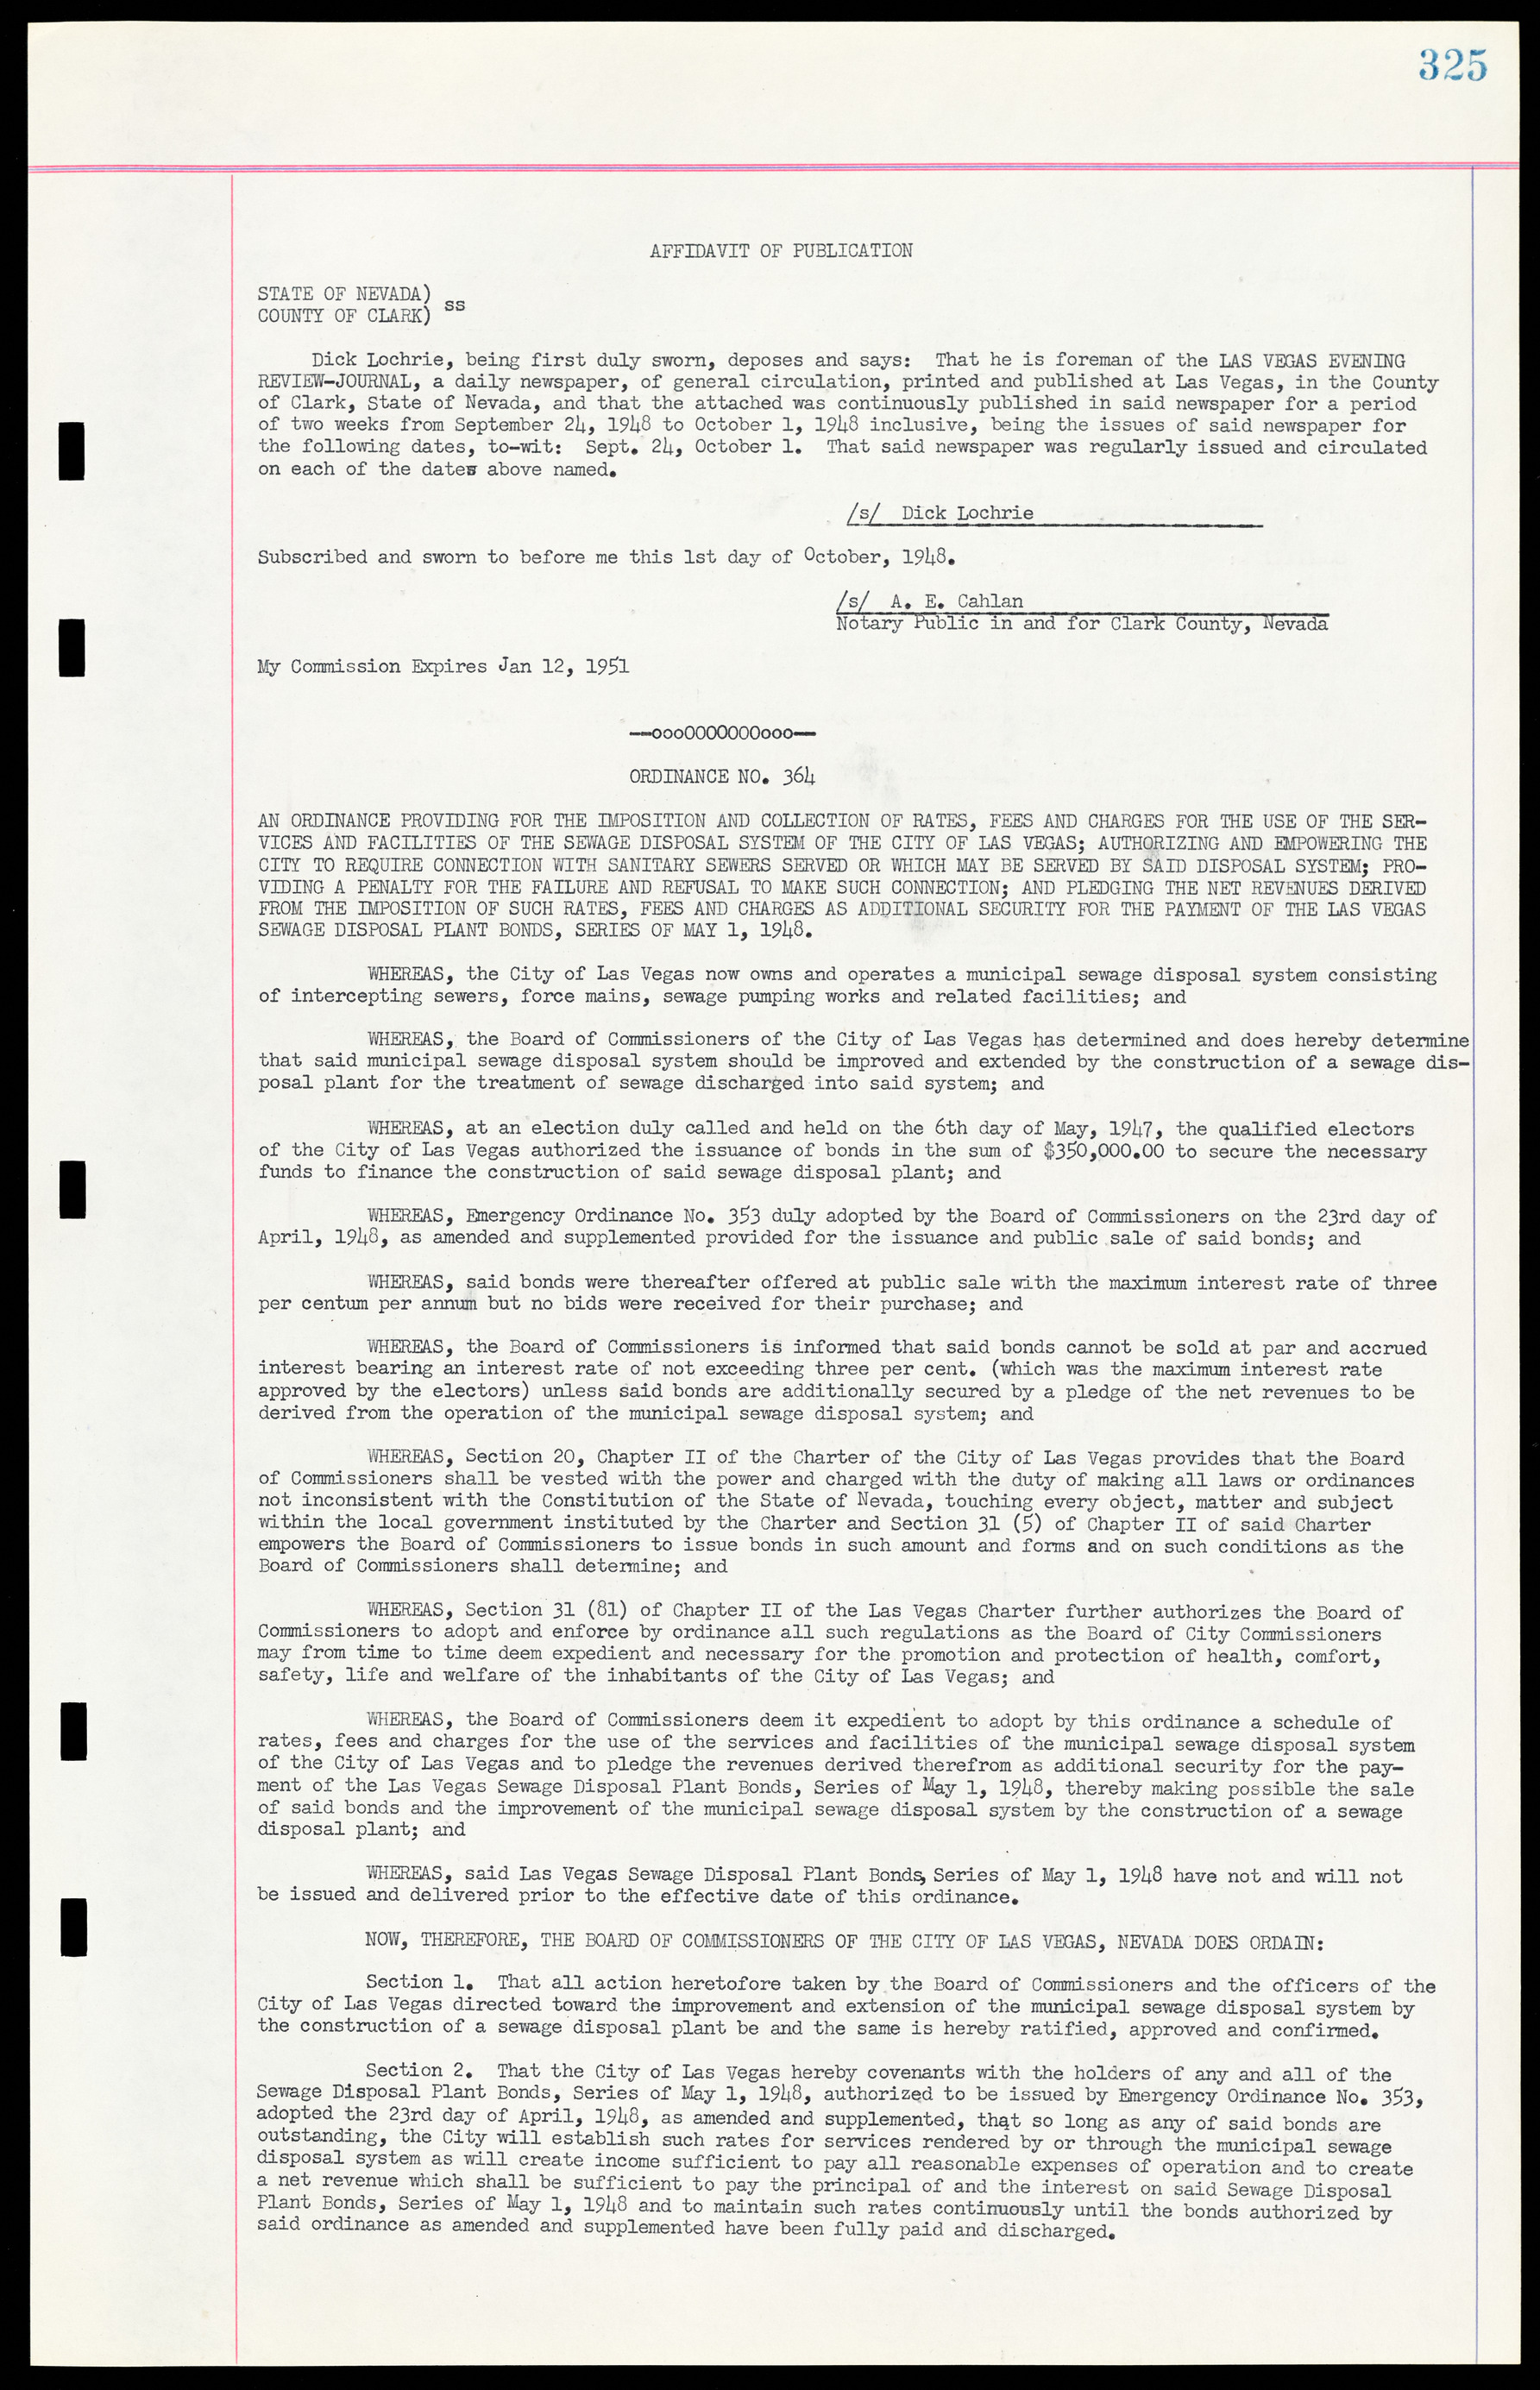 Las Vegas City Ordinances, March 31, 1933 to October 25, 1950, lvc000014-354